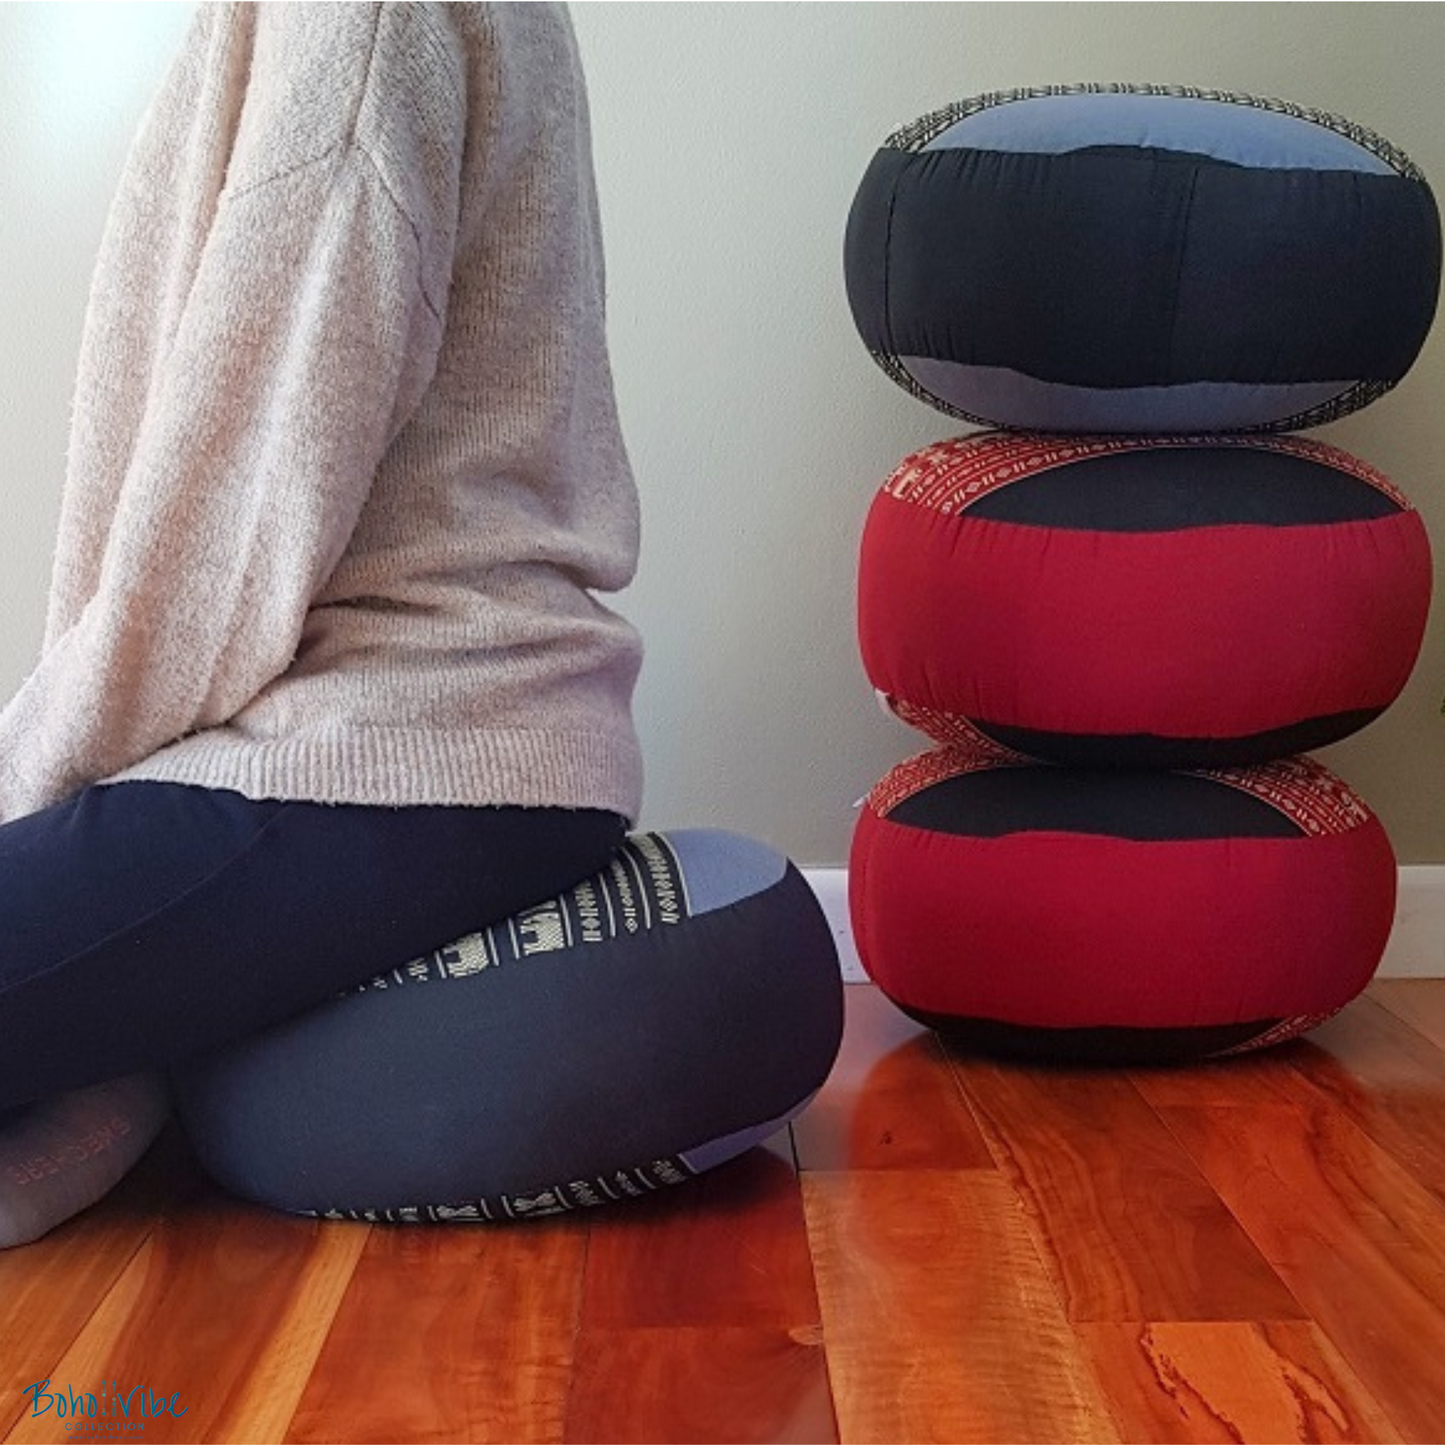 Boho ↡↟ Vibe Collection ↠ Meditation Yoga Round Blue Cushion Ottoman Pouf 